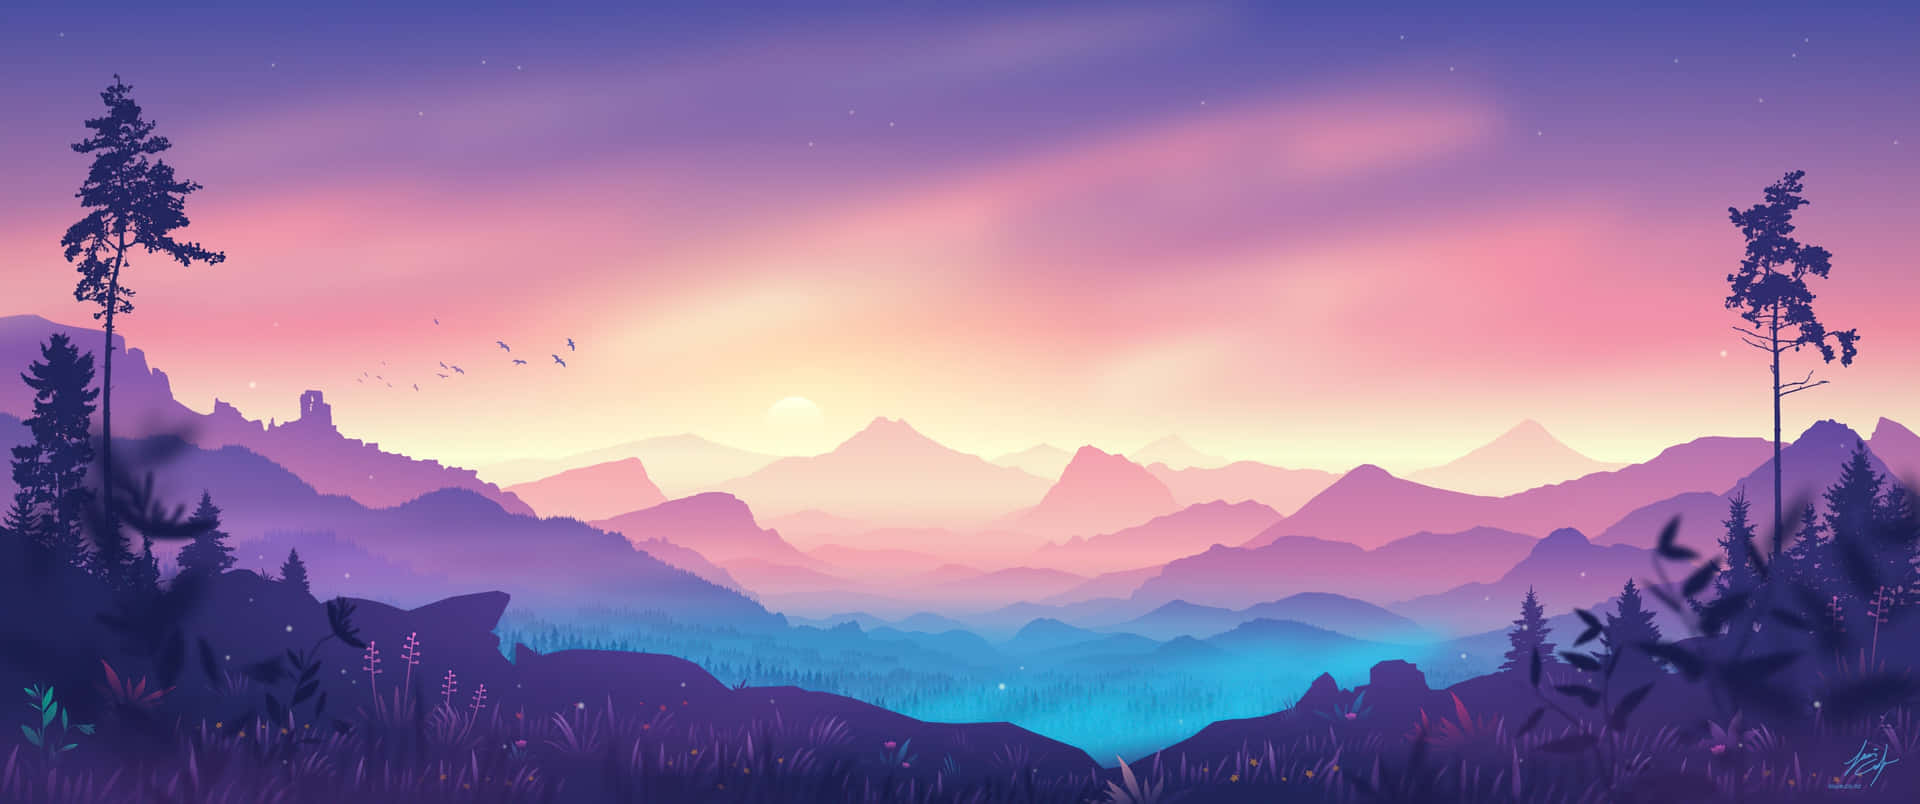 Misty Mountain Sunset Landscape Wallpaper